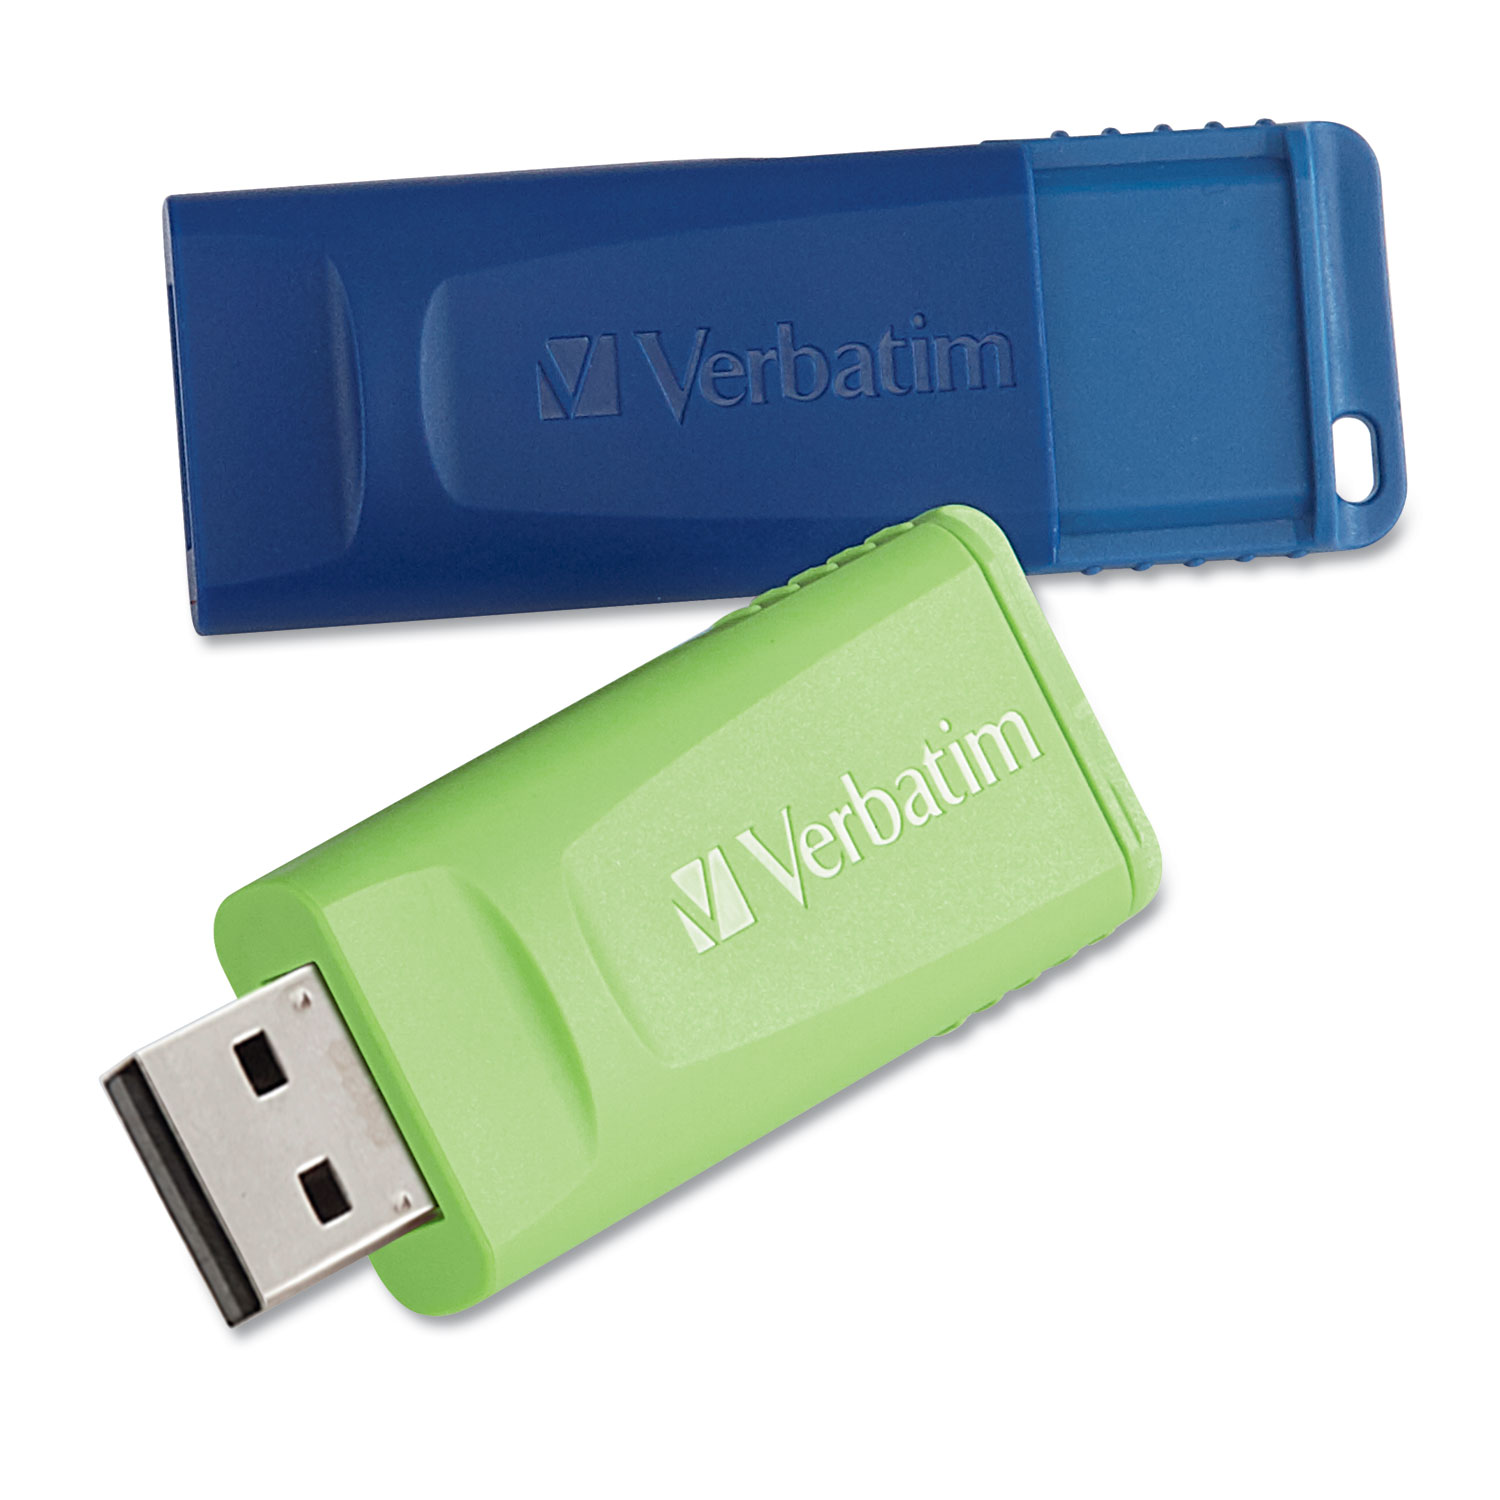  Verbatim 99124 Store 'n' Go USB Flash Drive, 32 GB, Assorted Colors, 2 Pack (VER99124) 